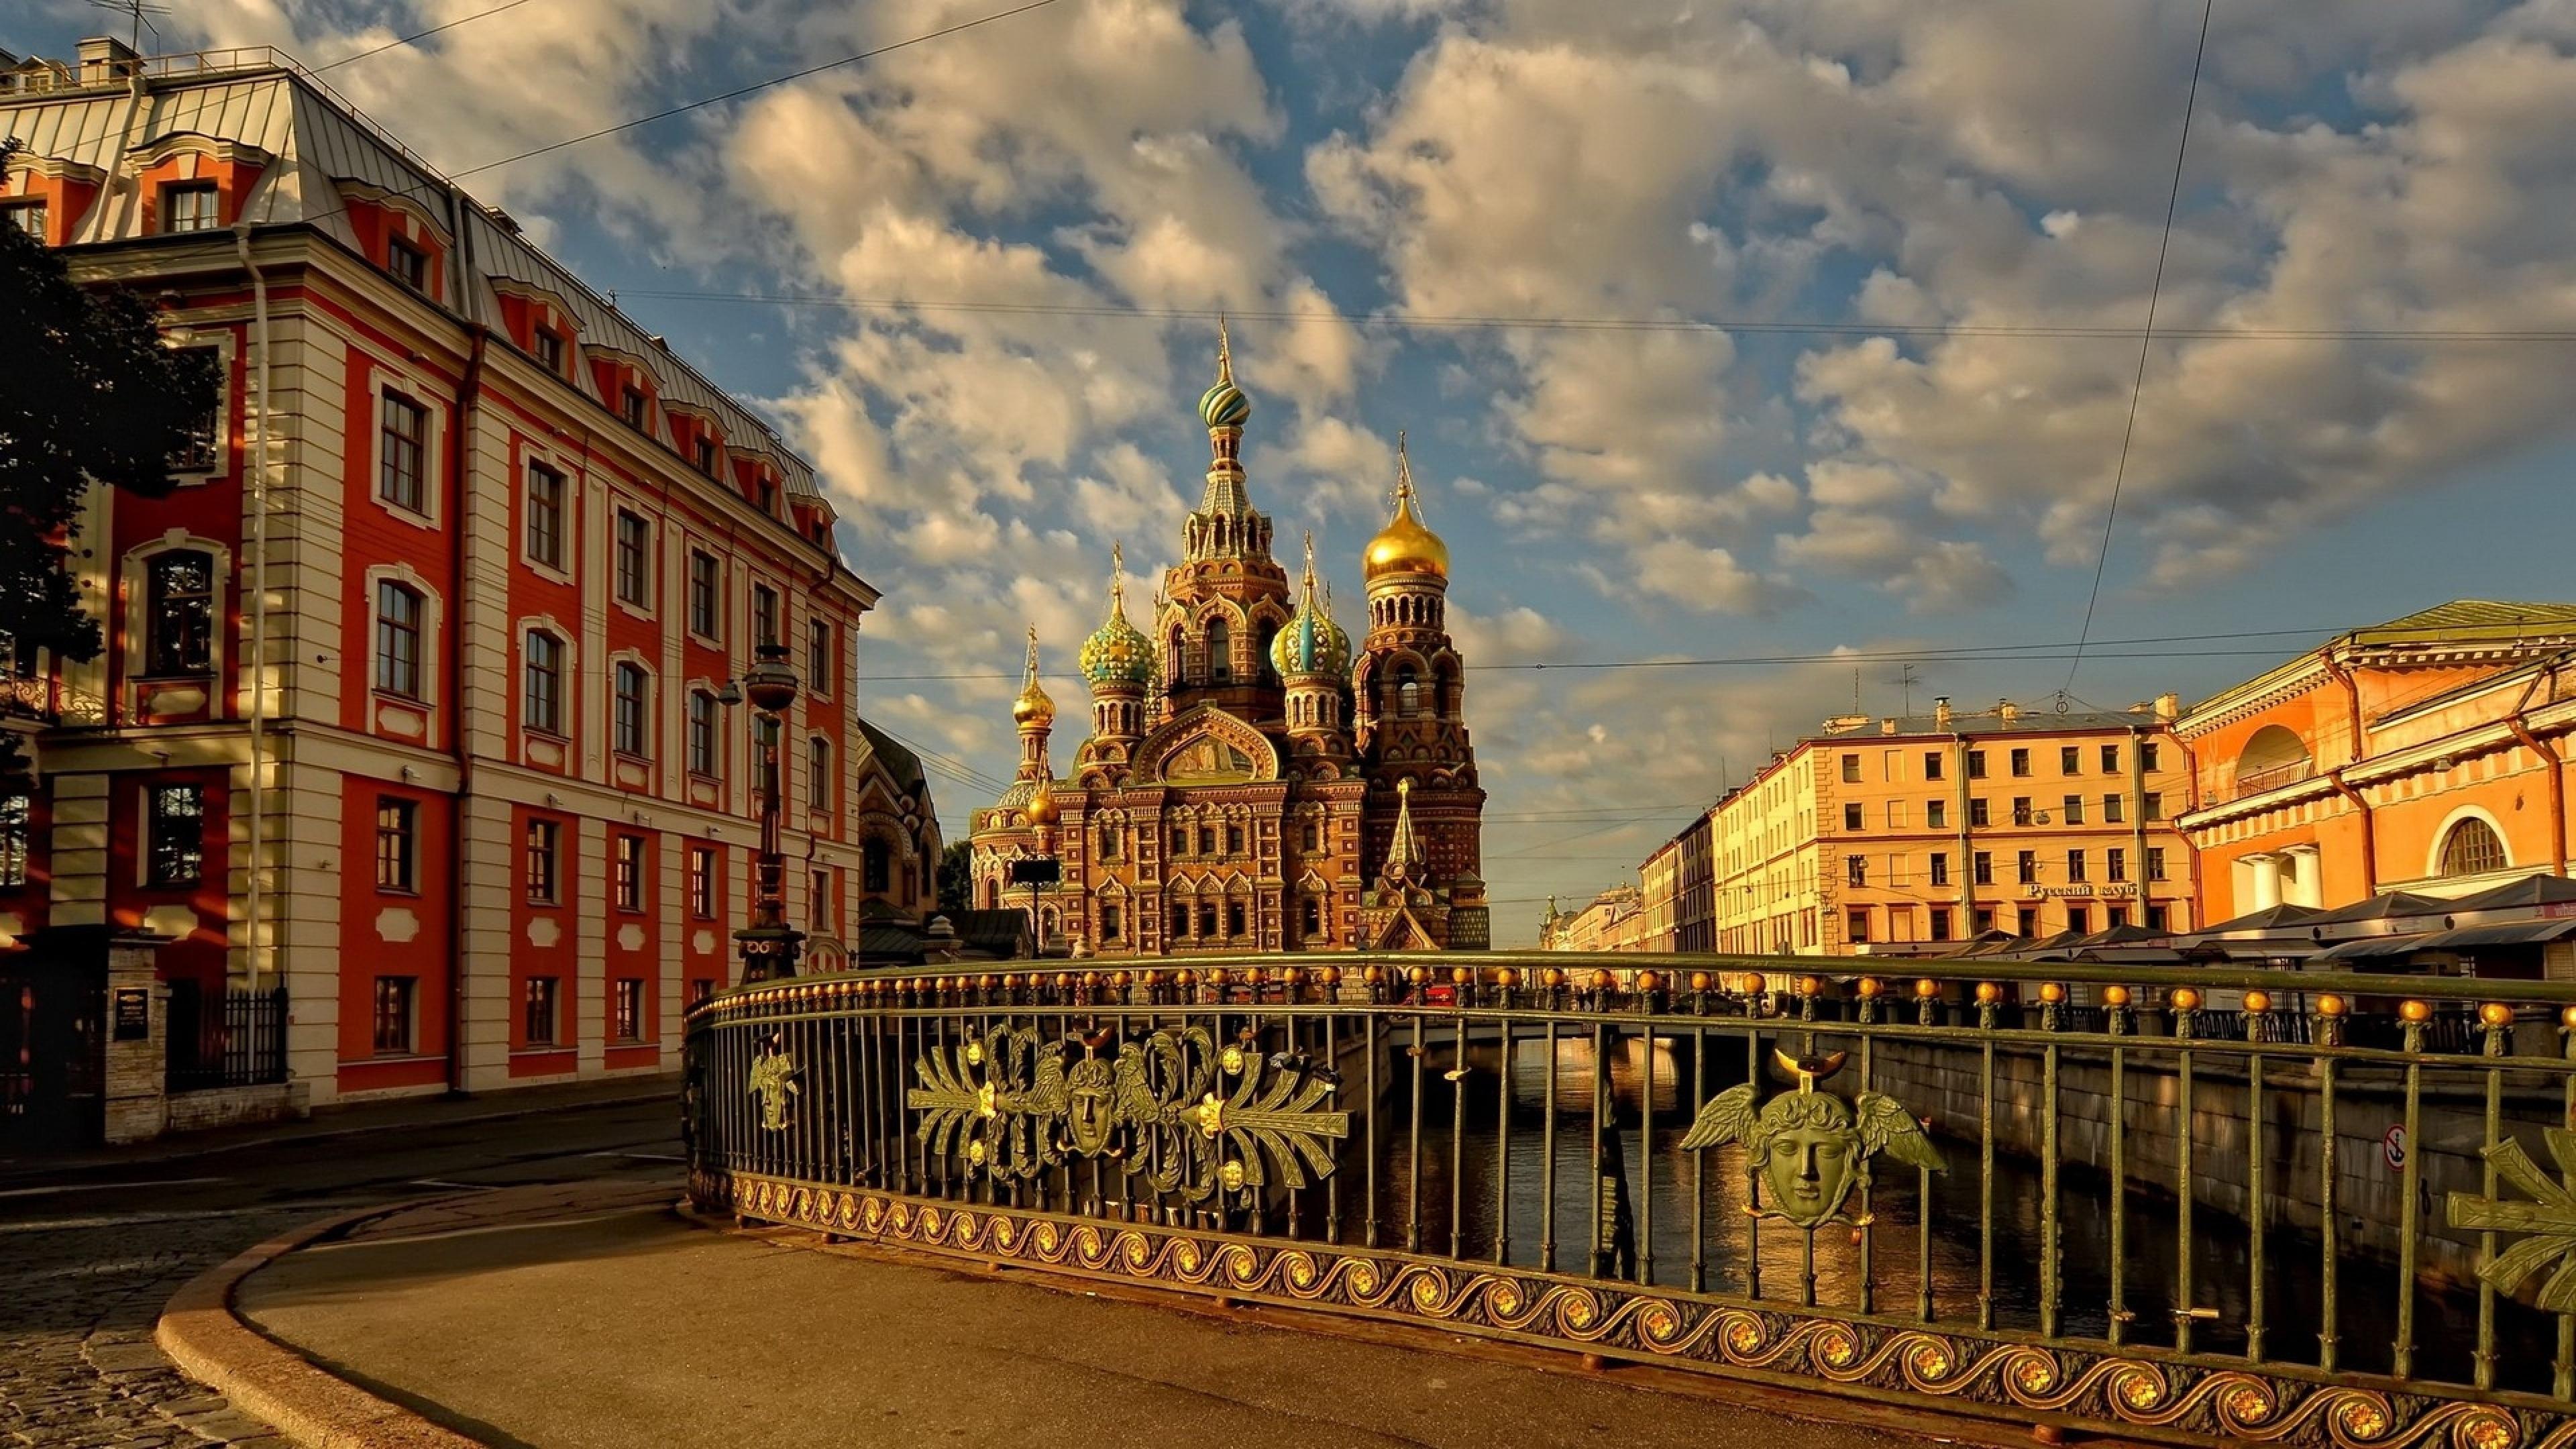 Church Of The Savior On Blood (St. Petersburg) 4K UltraHD Wallpaper